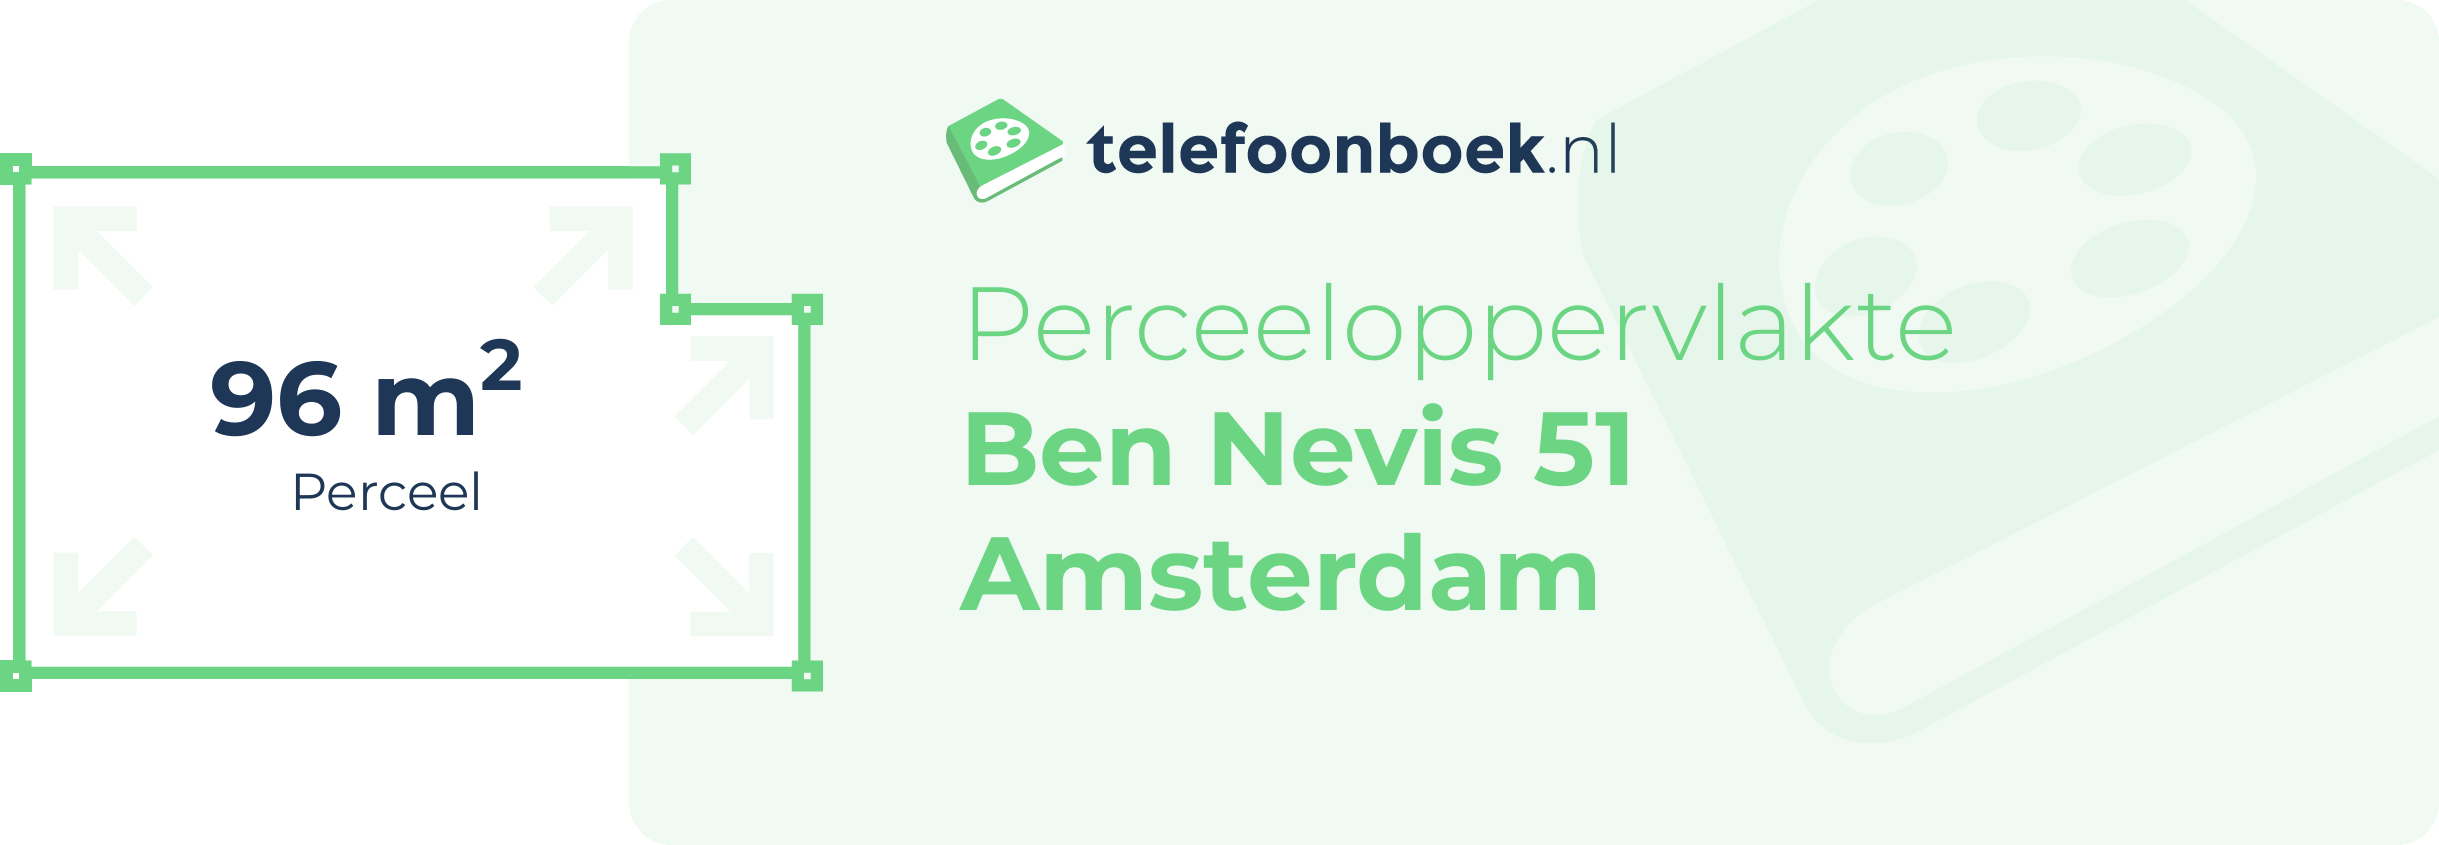 Perceeloppervlakte Ben Nevis 51 Amsterdam